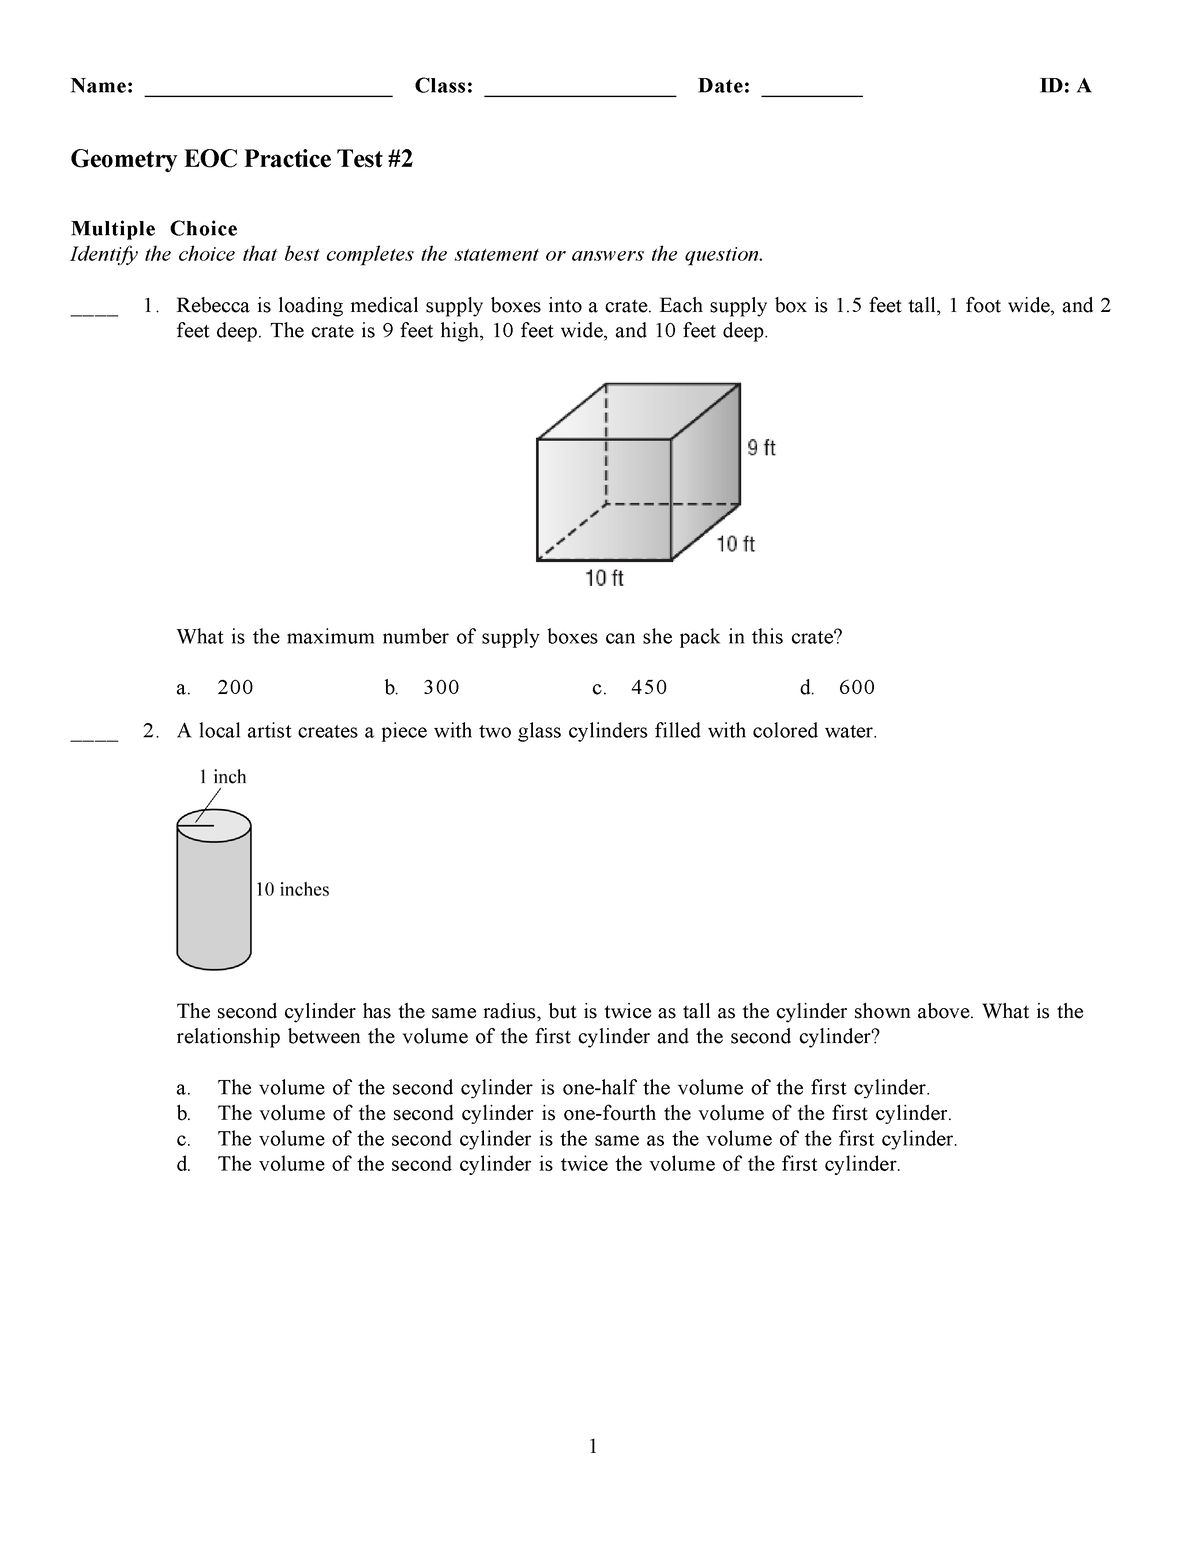 geometry-eoc-practice-test-2-name-class